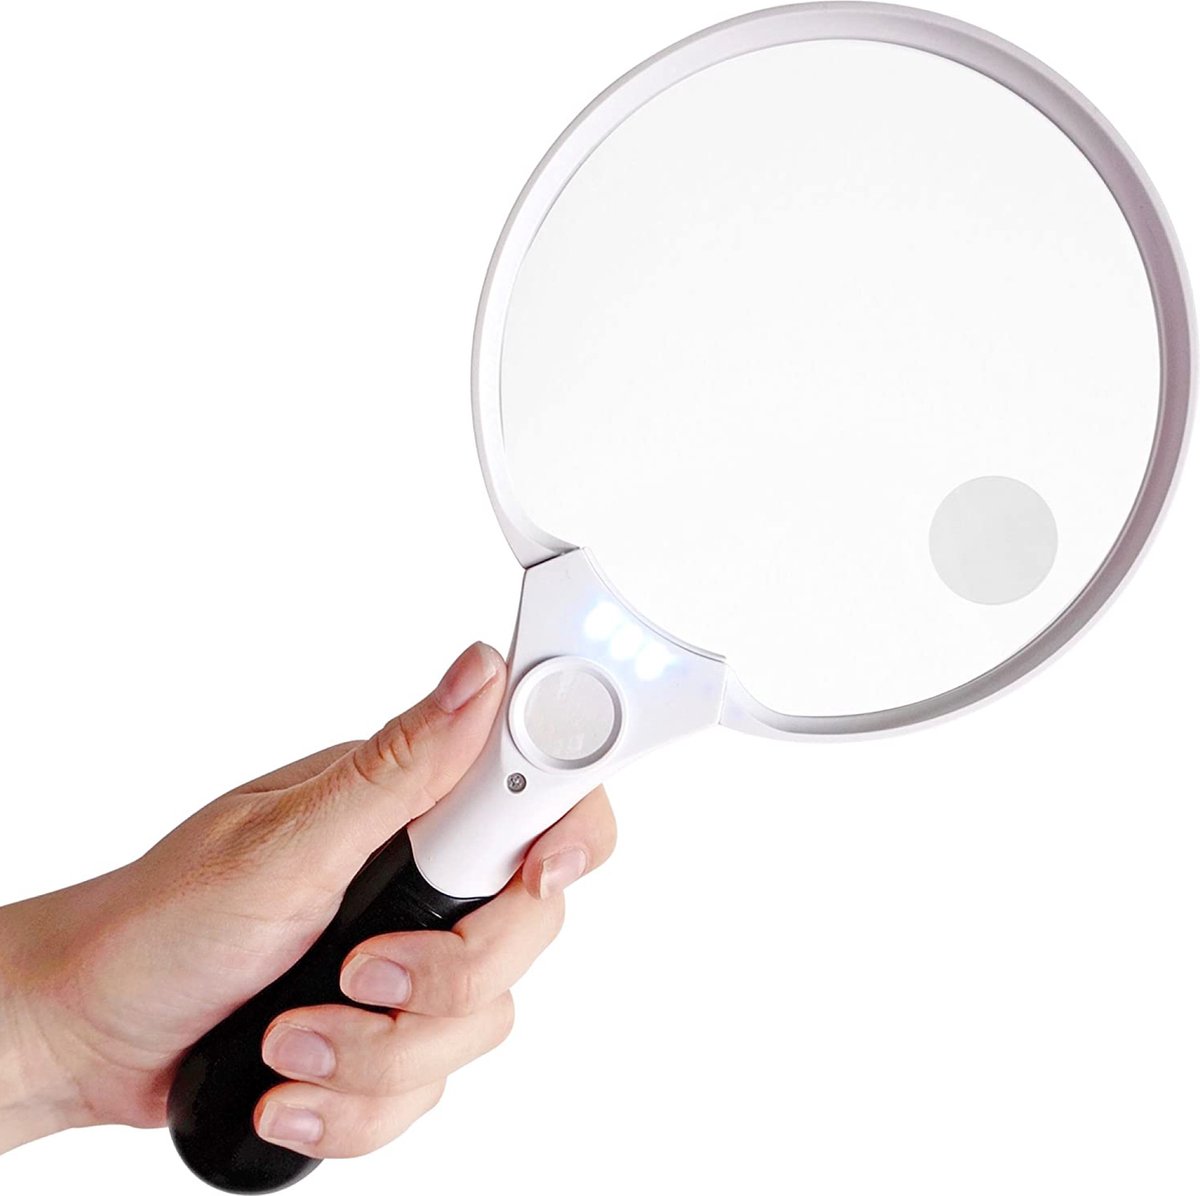 Safe Age® Vergrootglas met verlichting – 3 x LED – 2x 4x 25x – Leesloep voor ouderen - Loeplamp met led verlichting - Vergrootglas voor volwassenen - Safe Age